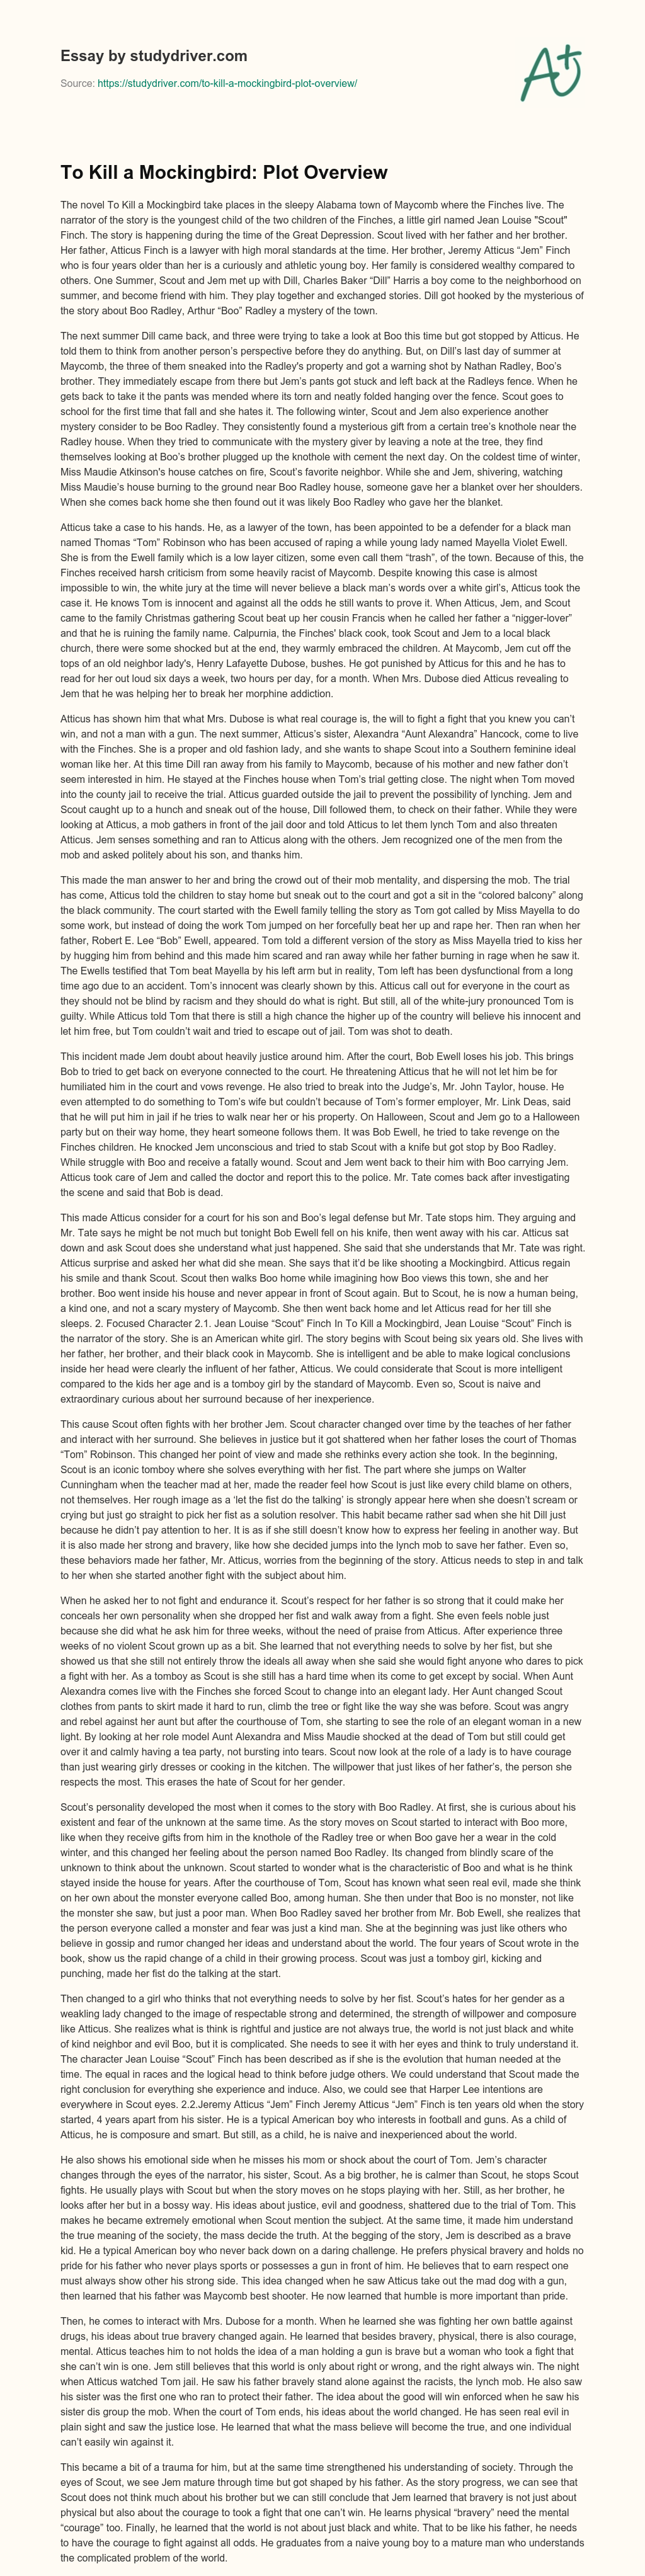 To Kill a Mockingbird: Plot Overview essay